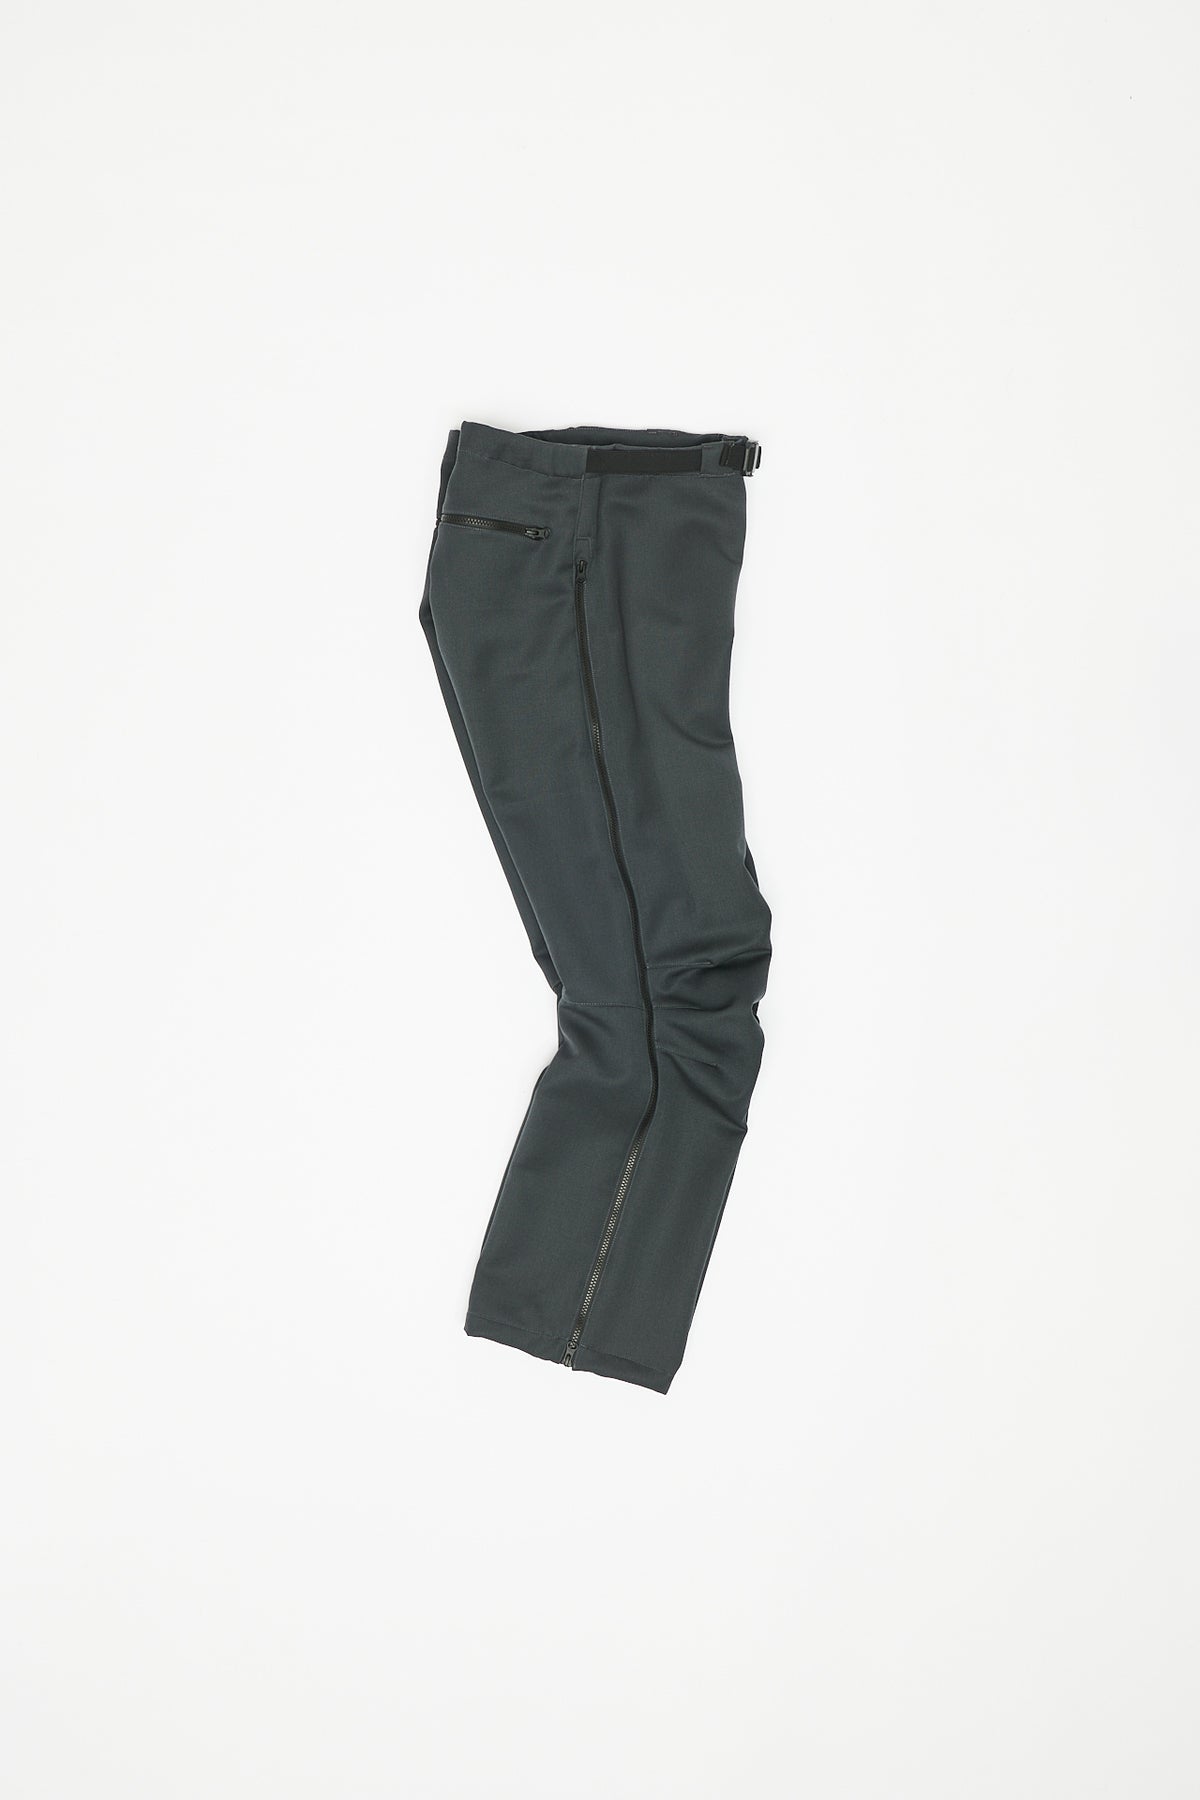 Belted pants in grey - GR 10 K